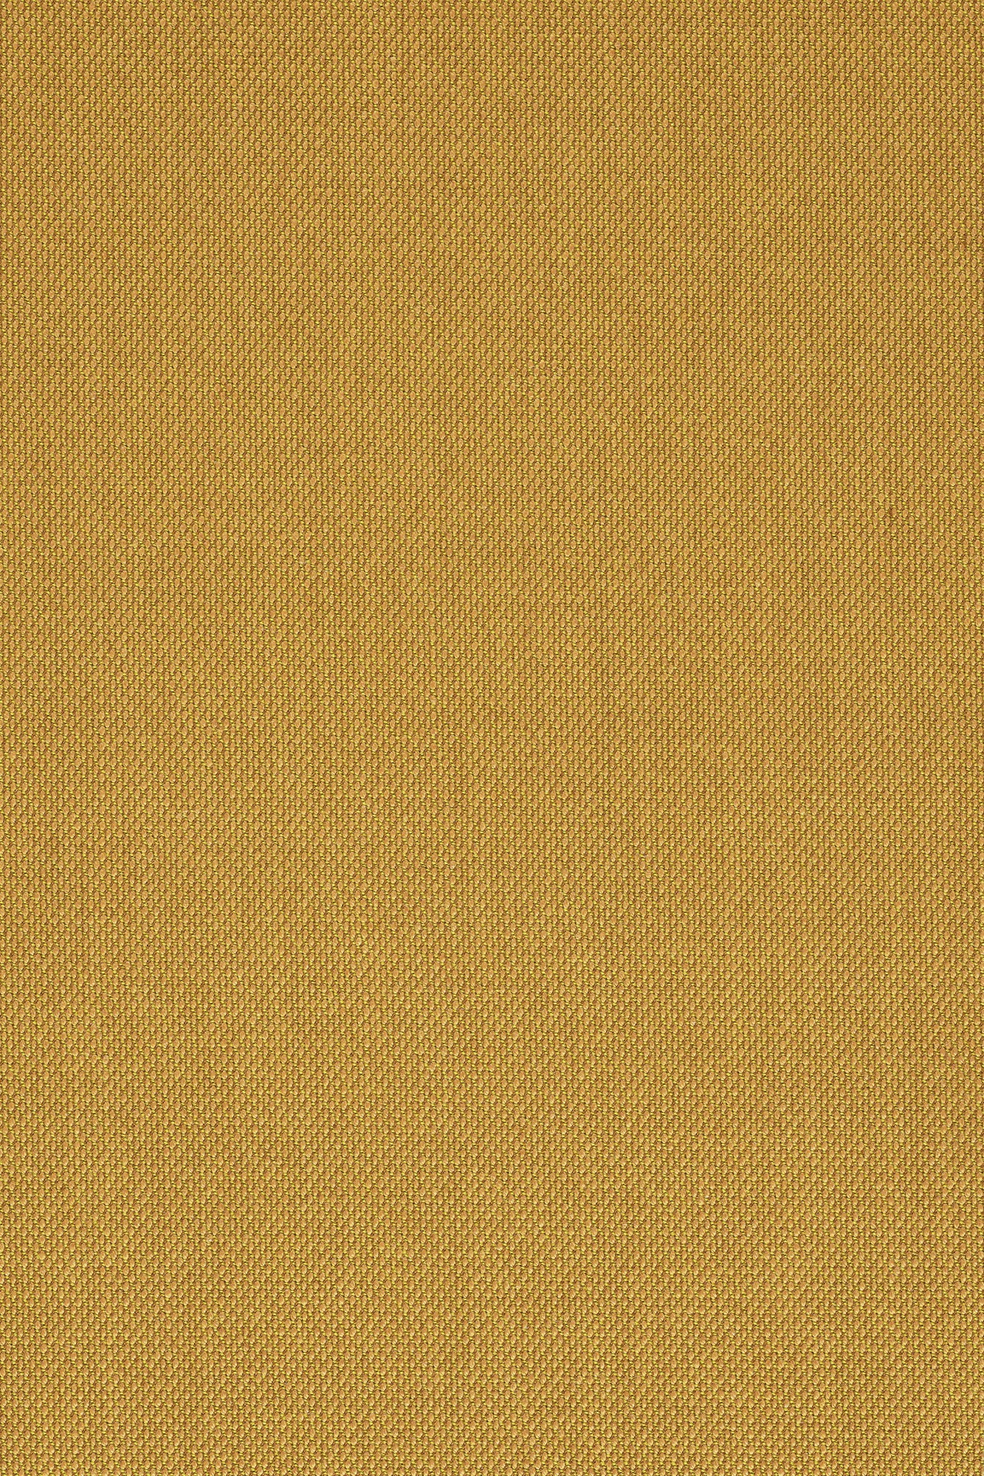 Fabric sample Steelcut Trio 3 466 yellow